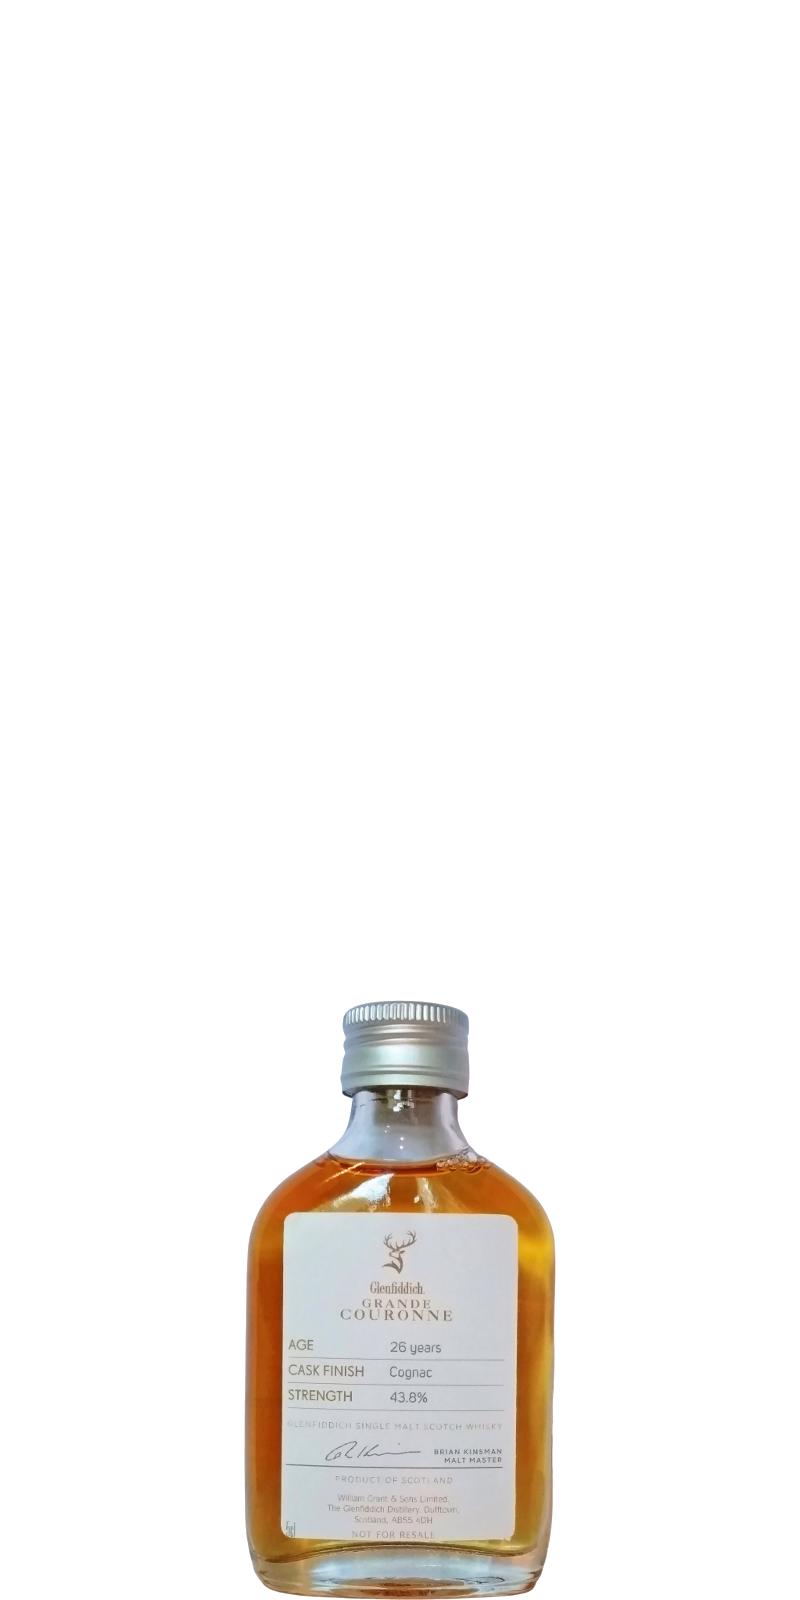 Glenfiddich 26Yr Grande Couronne Cognac Cask Finish Single Malt Scotch  Whisky